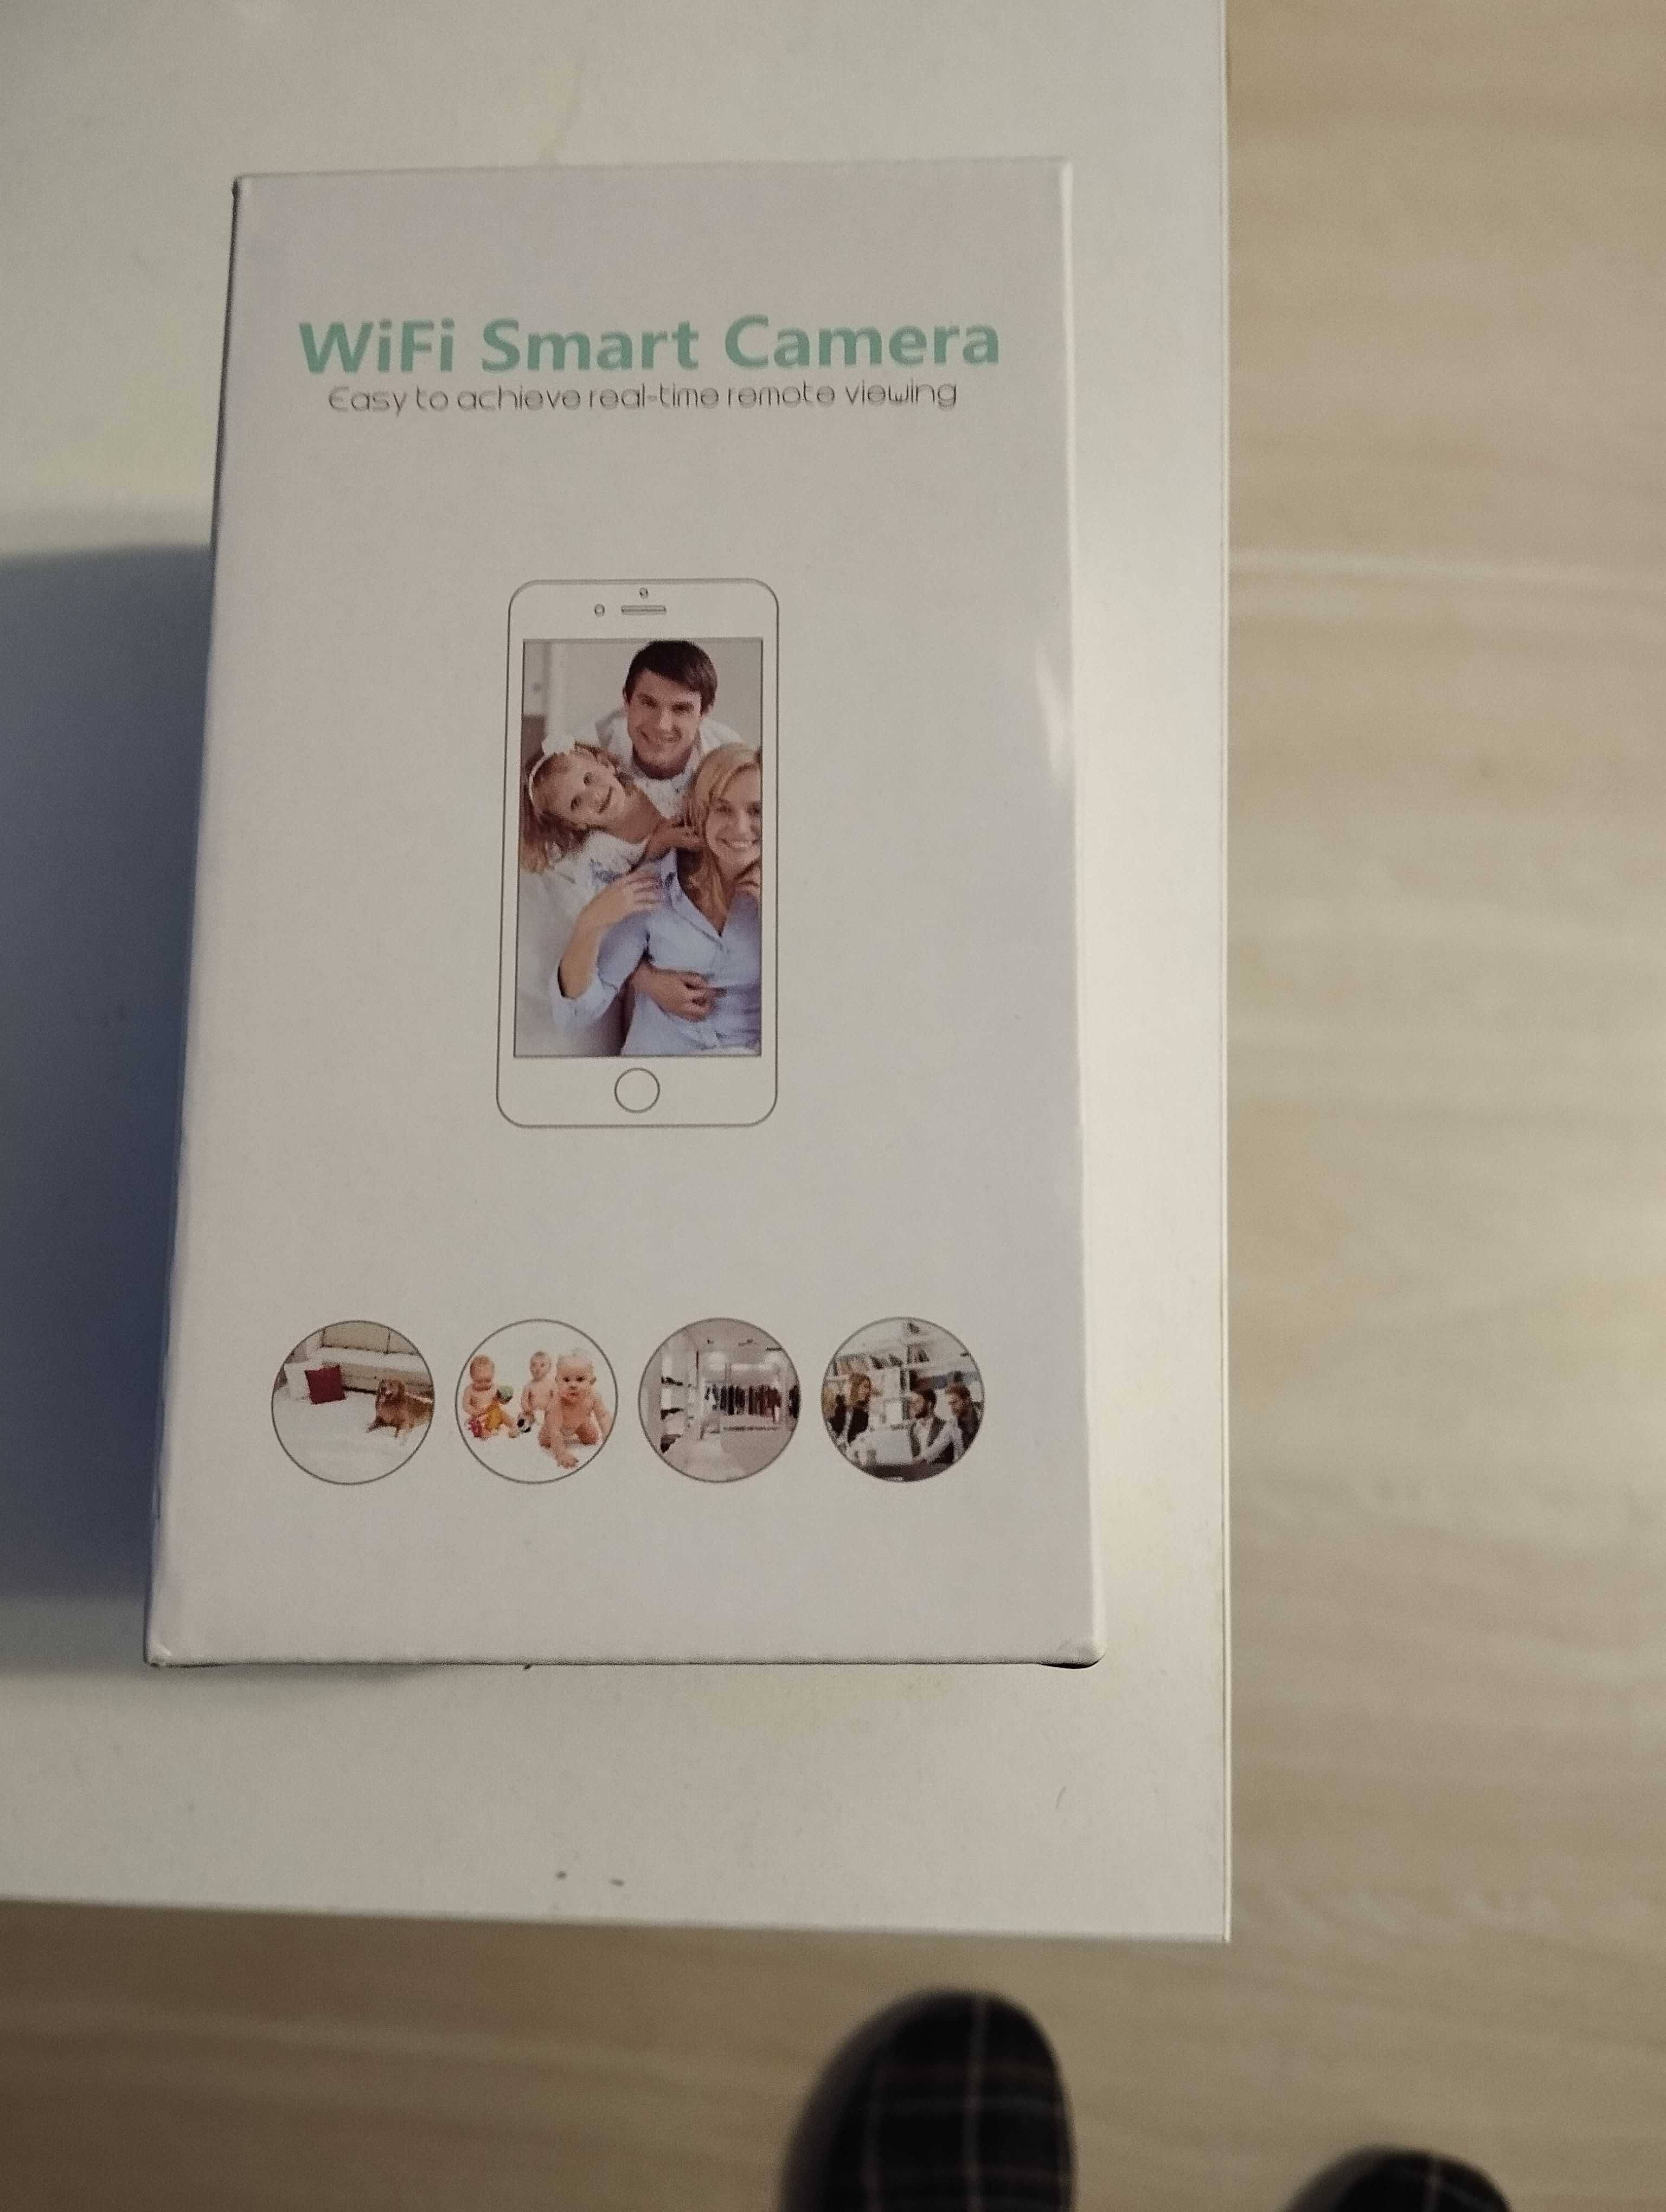 Wi-fi Smart camera